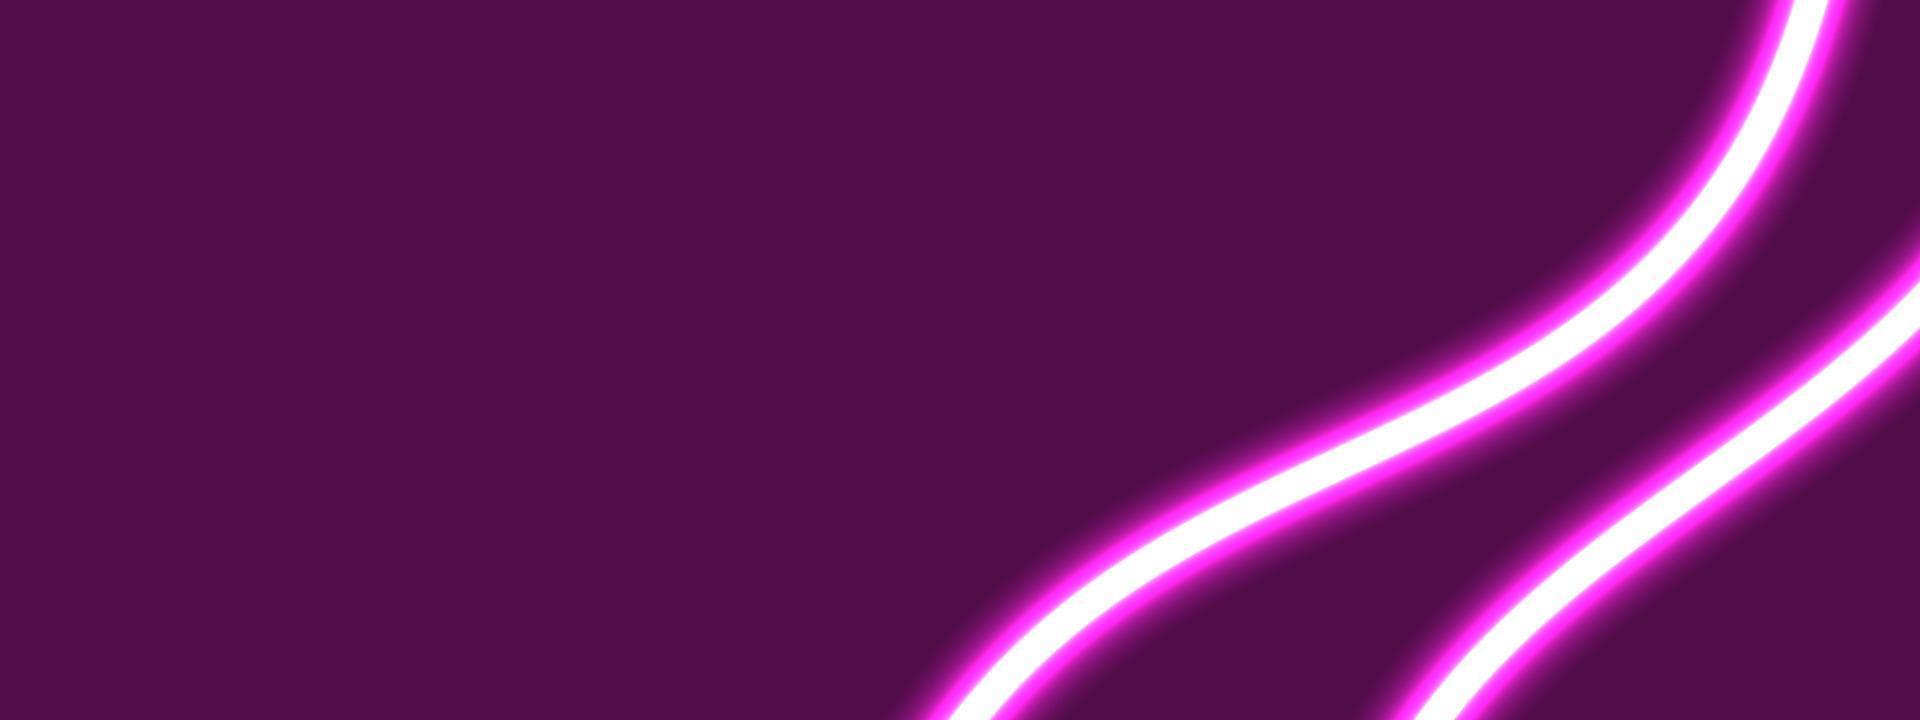 abstraktes rosa Neonhintergrunddesign. Vektor-Illustration vektor